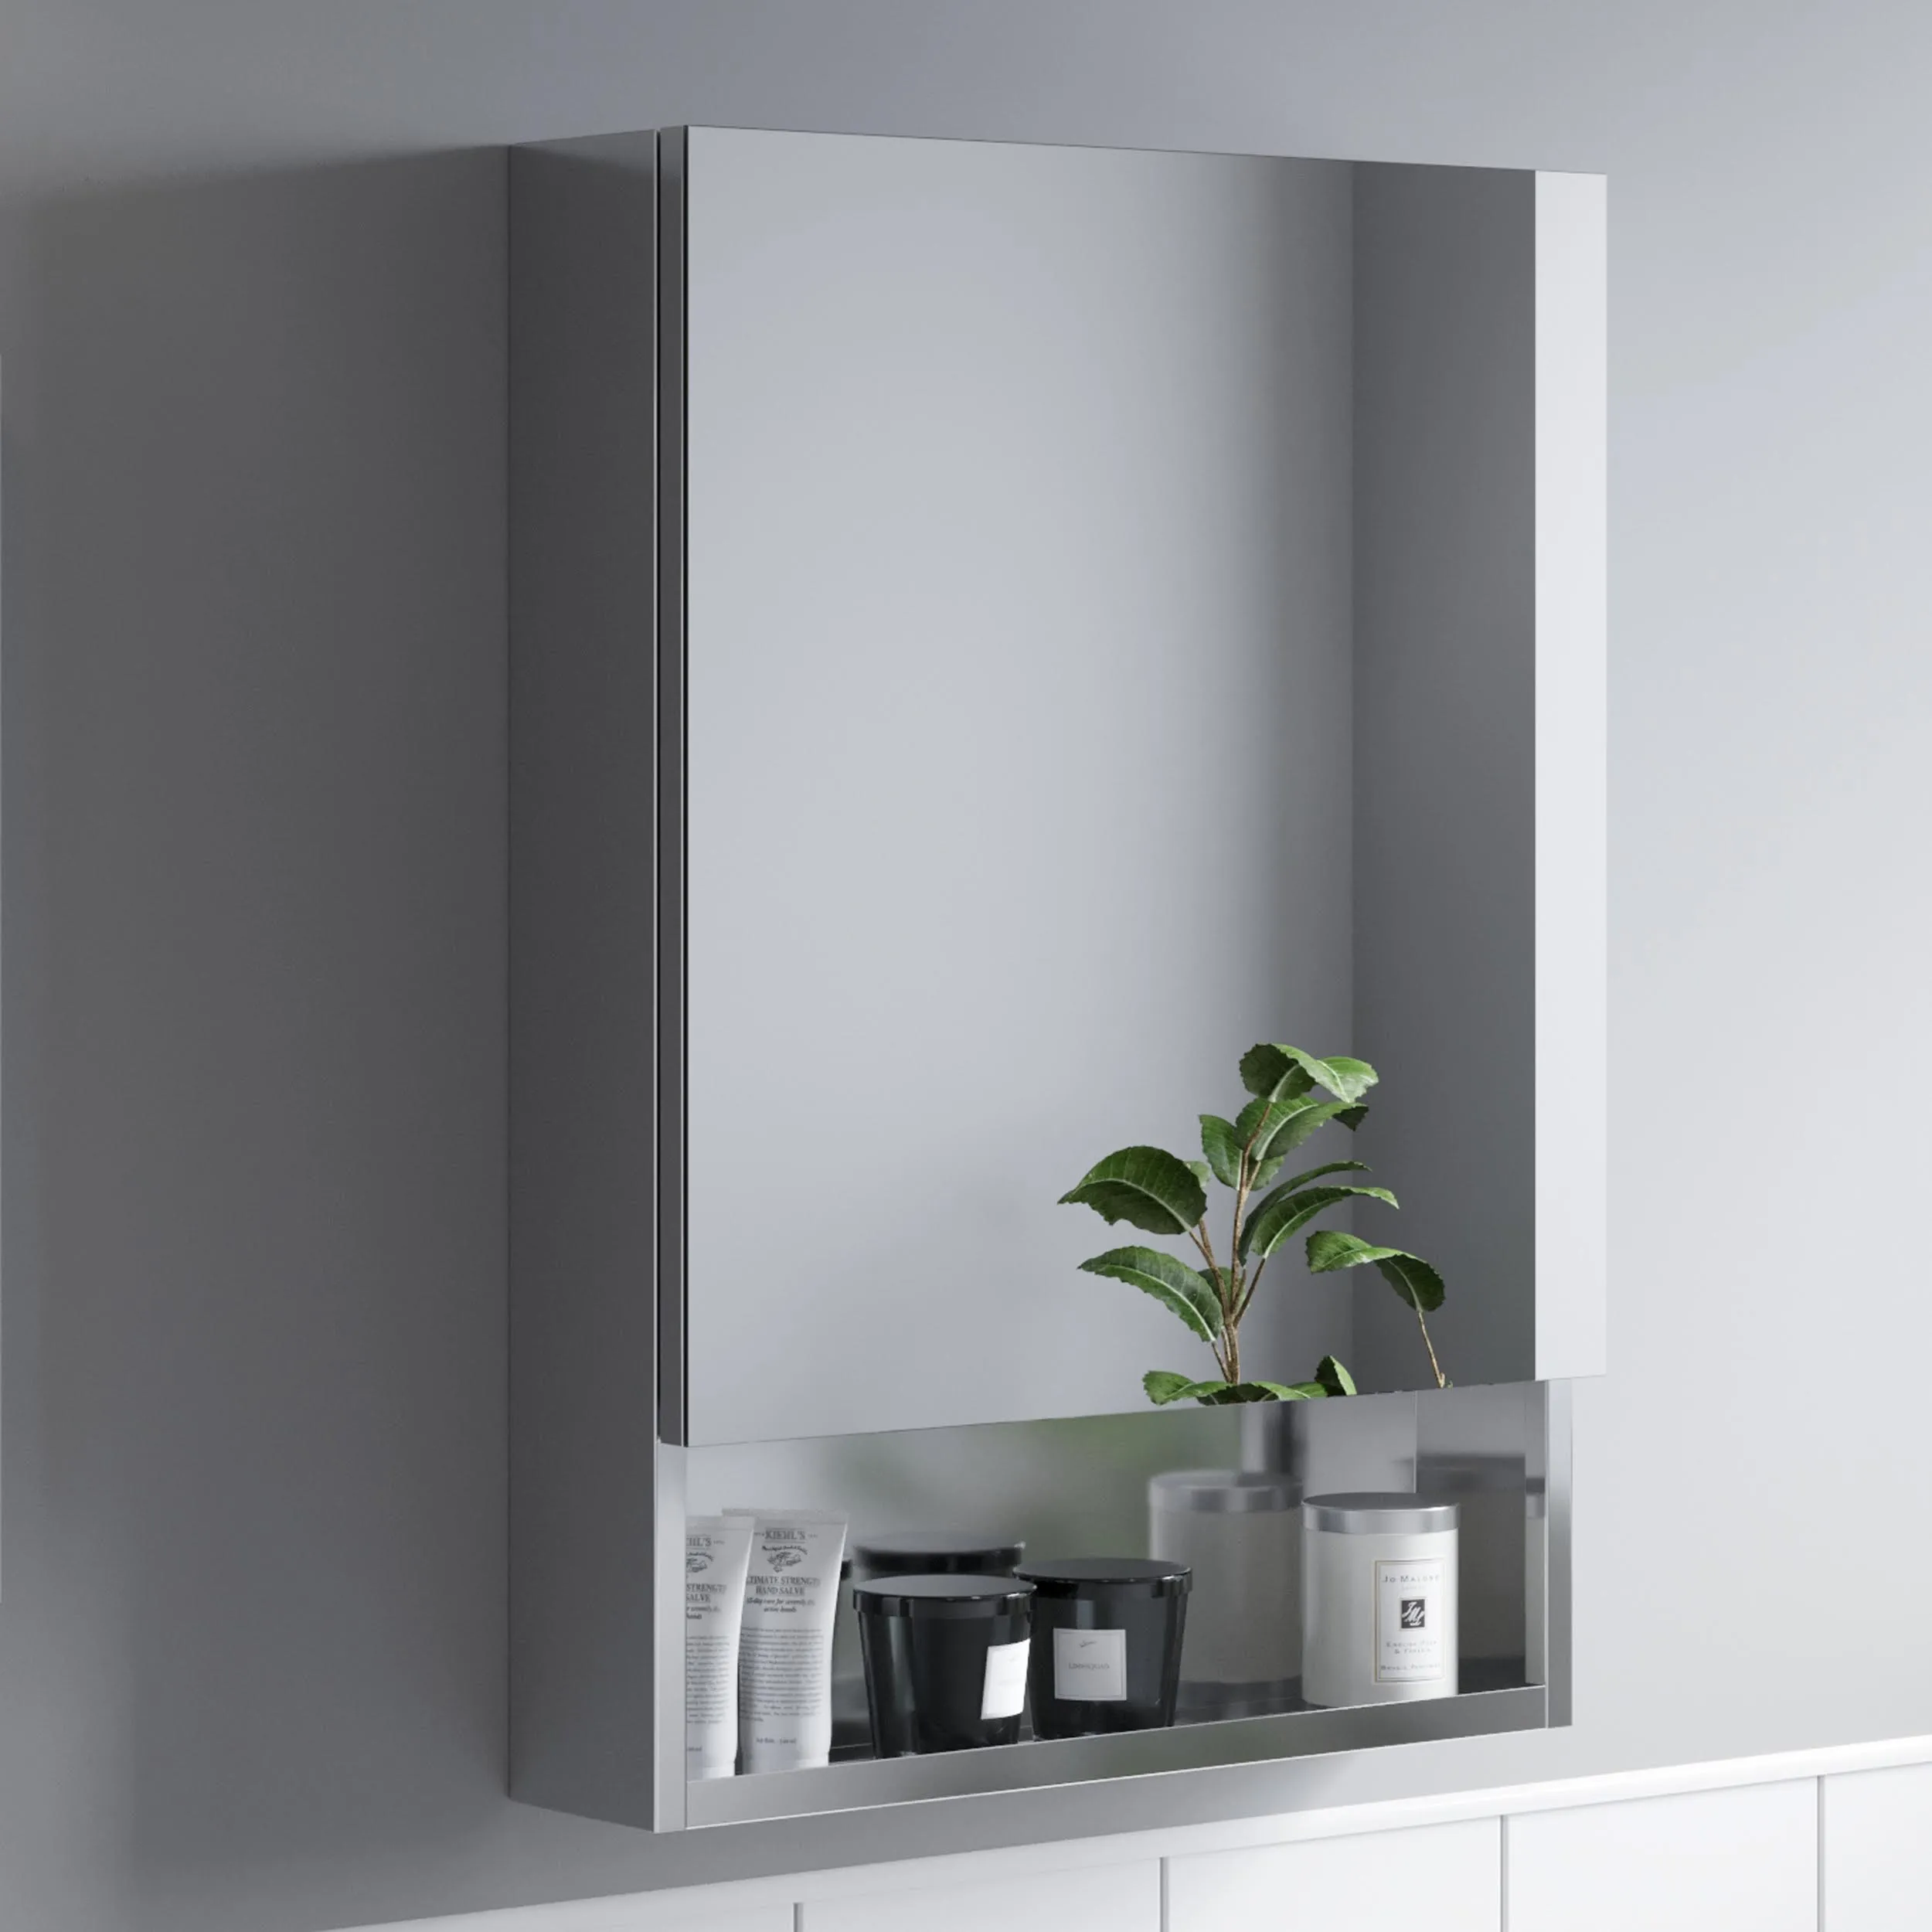 Artis Stahl Single Door Stainless Steel Mirror Cabinet with Shelf 500 x 700mm